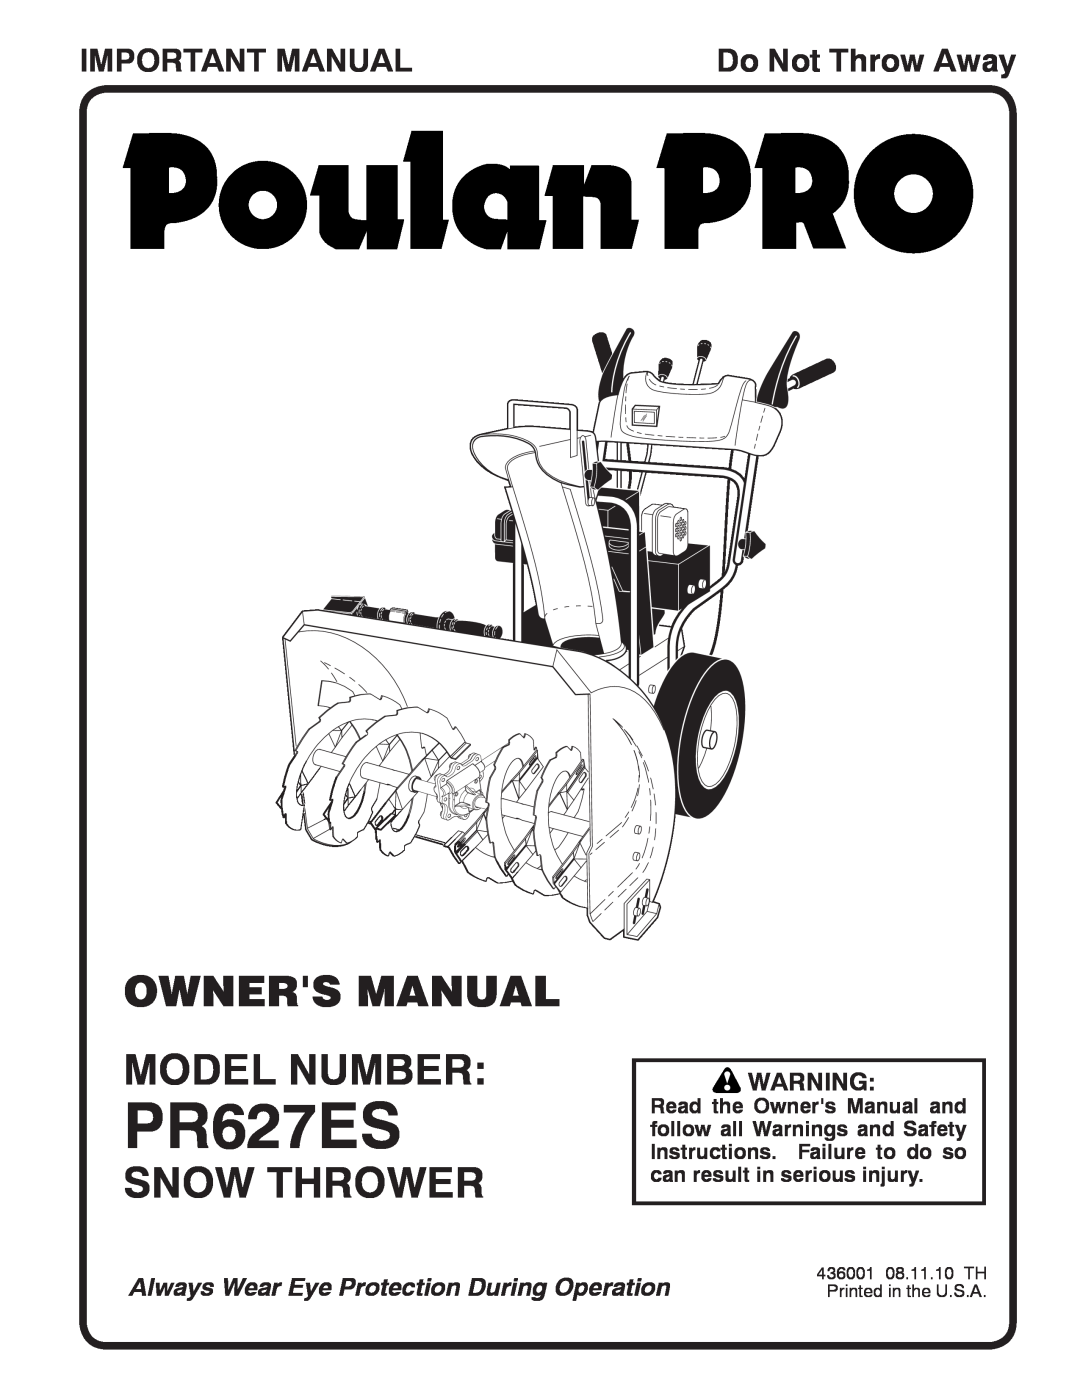 Poulan 96192003801, 436001 owner manual Snow Thrower, Important Manual, PR627ES, Do Not Throw Away 